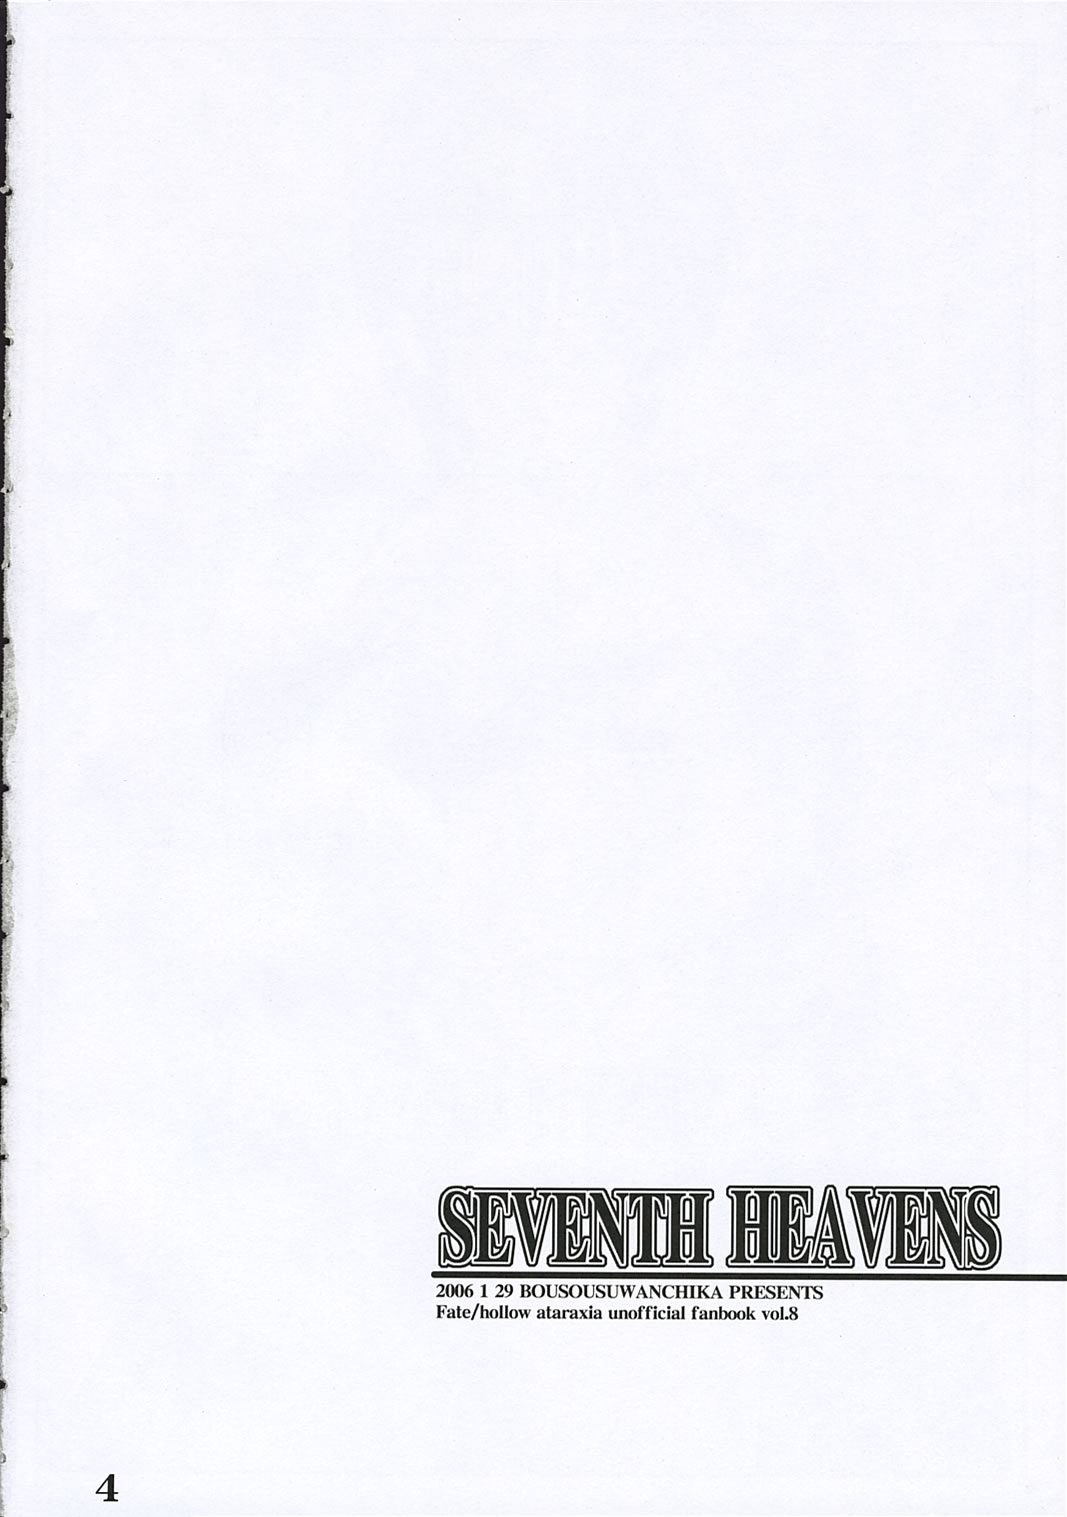 FHA - SEVENTH HEAVENS [Bousou Suwanchika] 